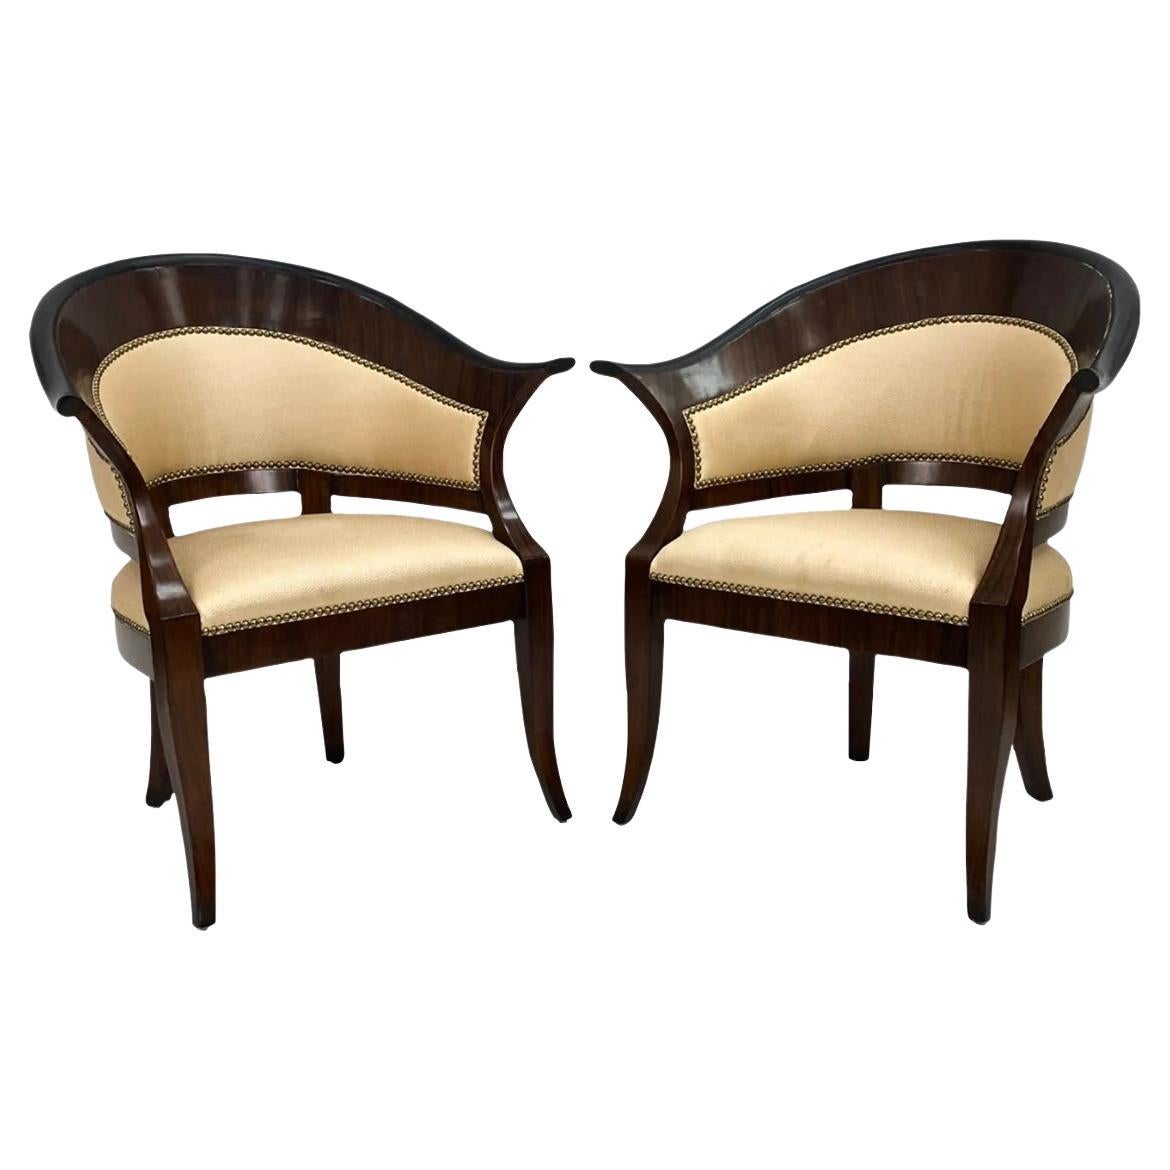 Pair of William Switzer Biedermeier Style Club Chairs